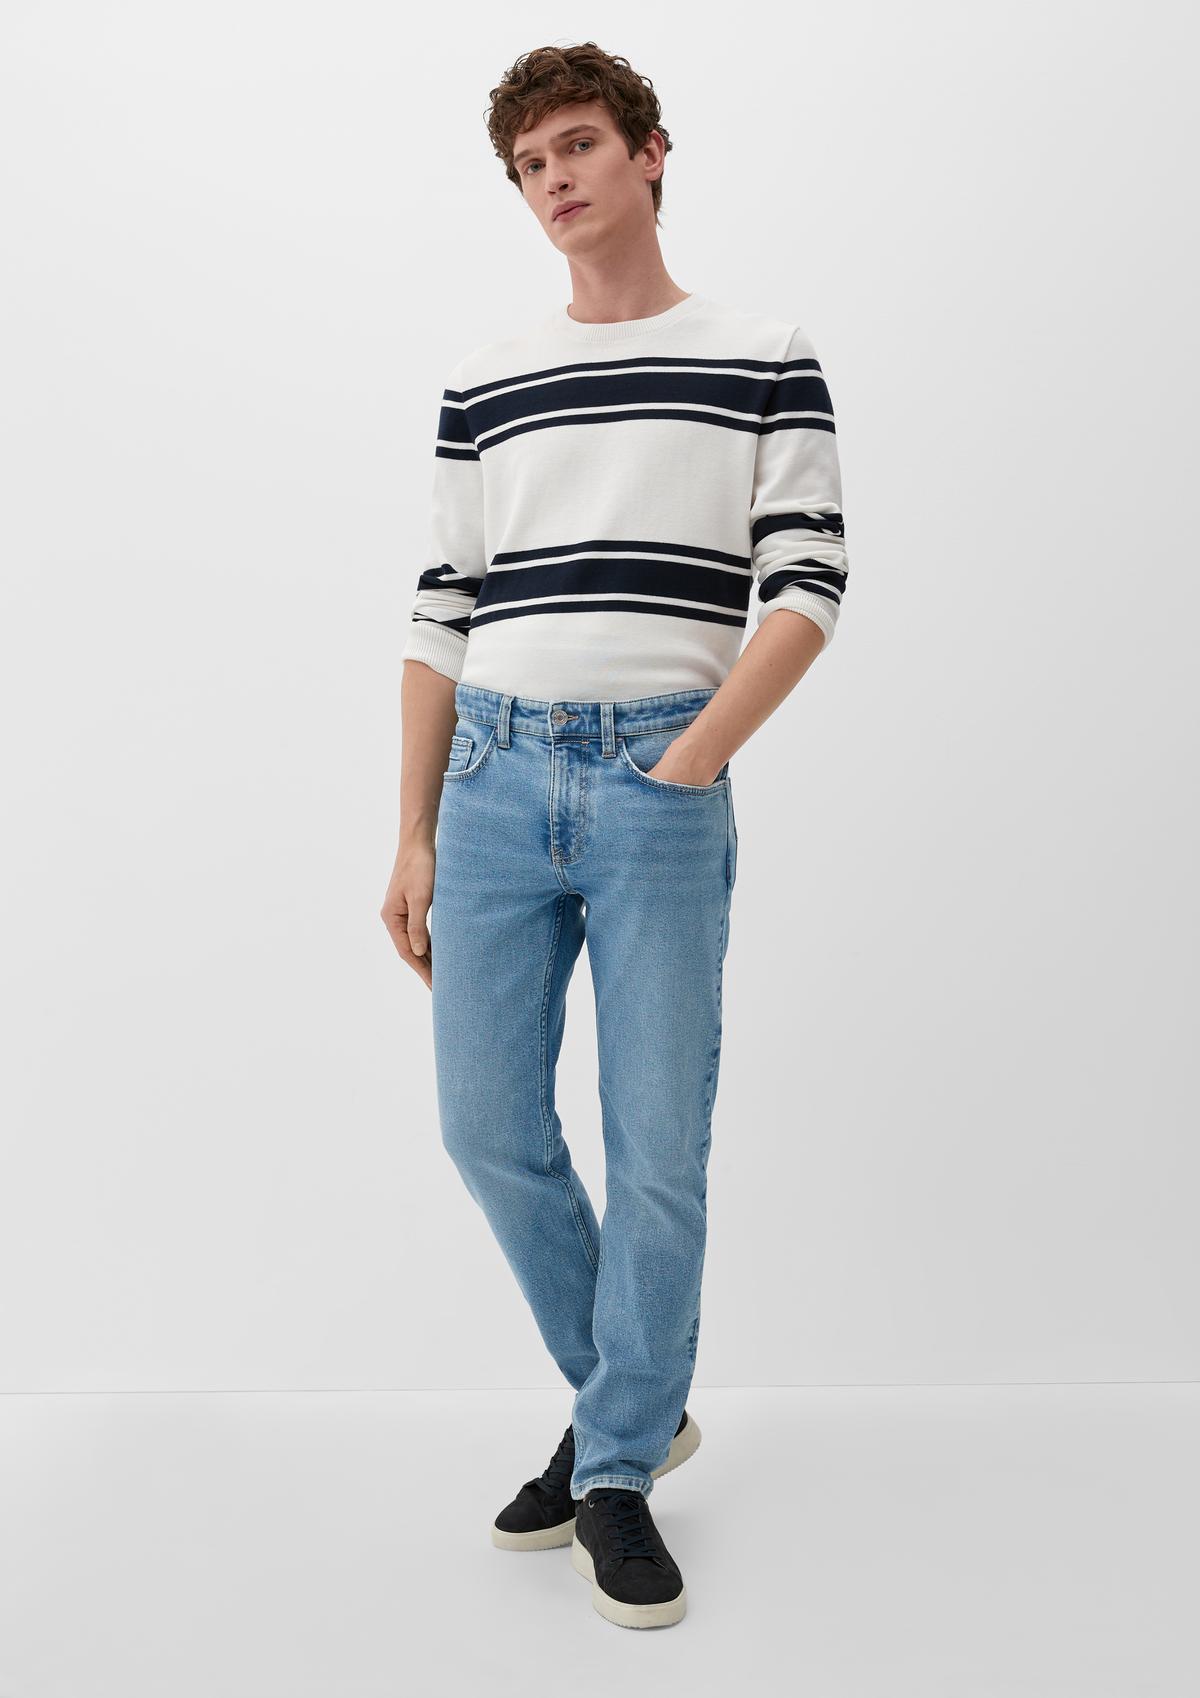 s.Oliver Nelio Jeans / Slim Fit / Mid Rise / Slim Leg / Garment Wash